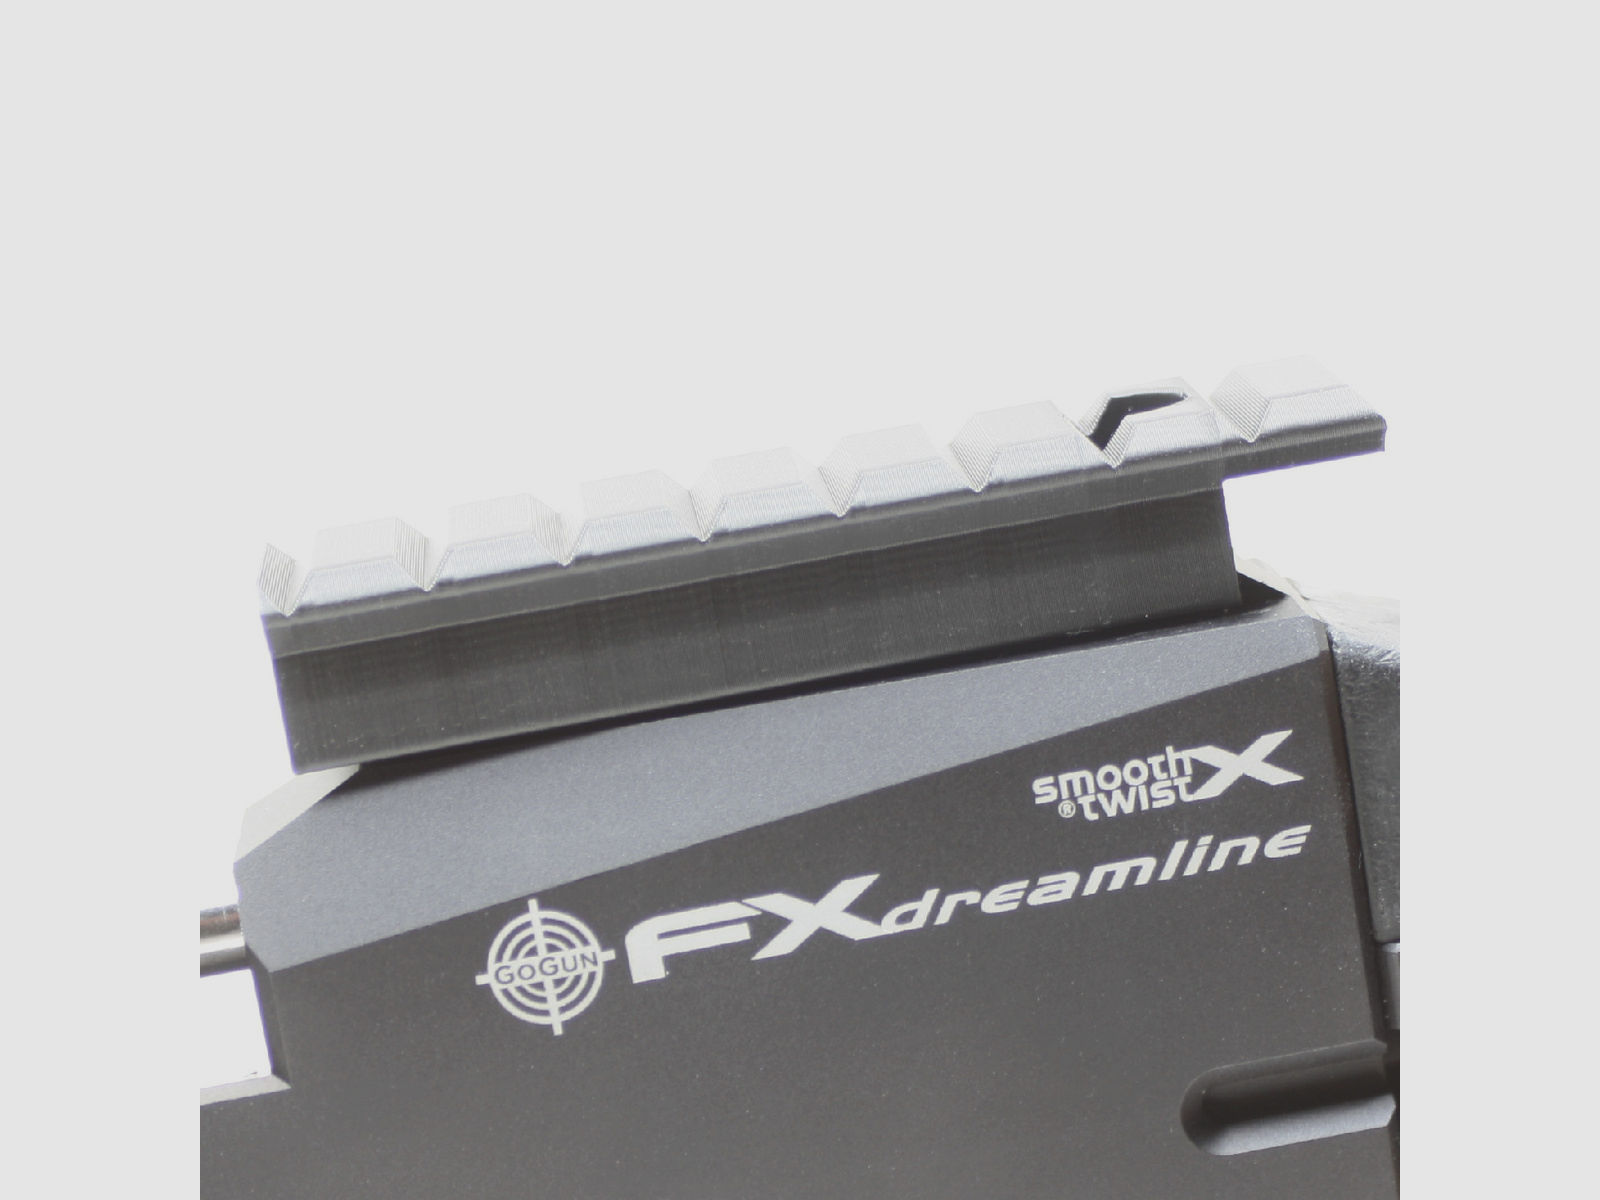 FX Dreamline Lite & Classic Picatinny Weaver Adapter-Schiene Kunststoff W070M